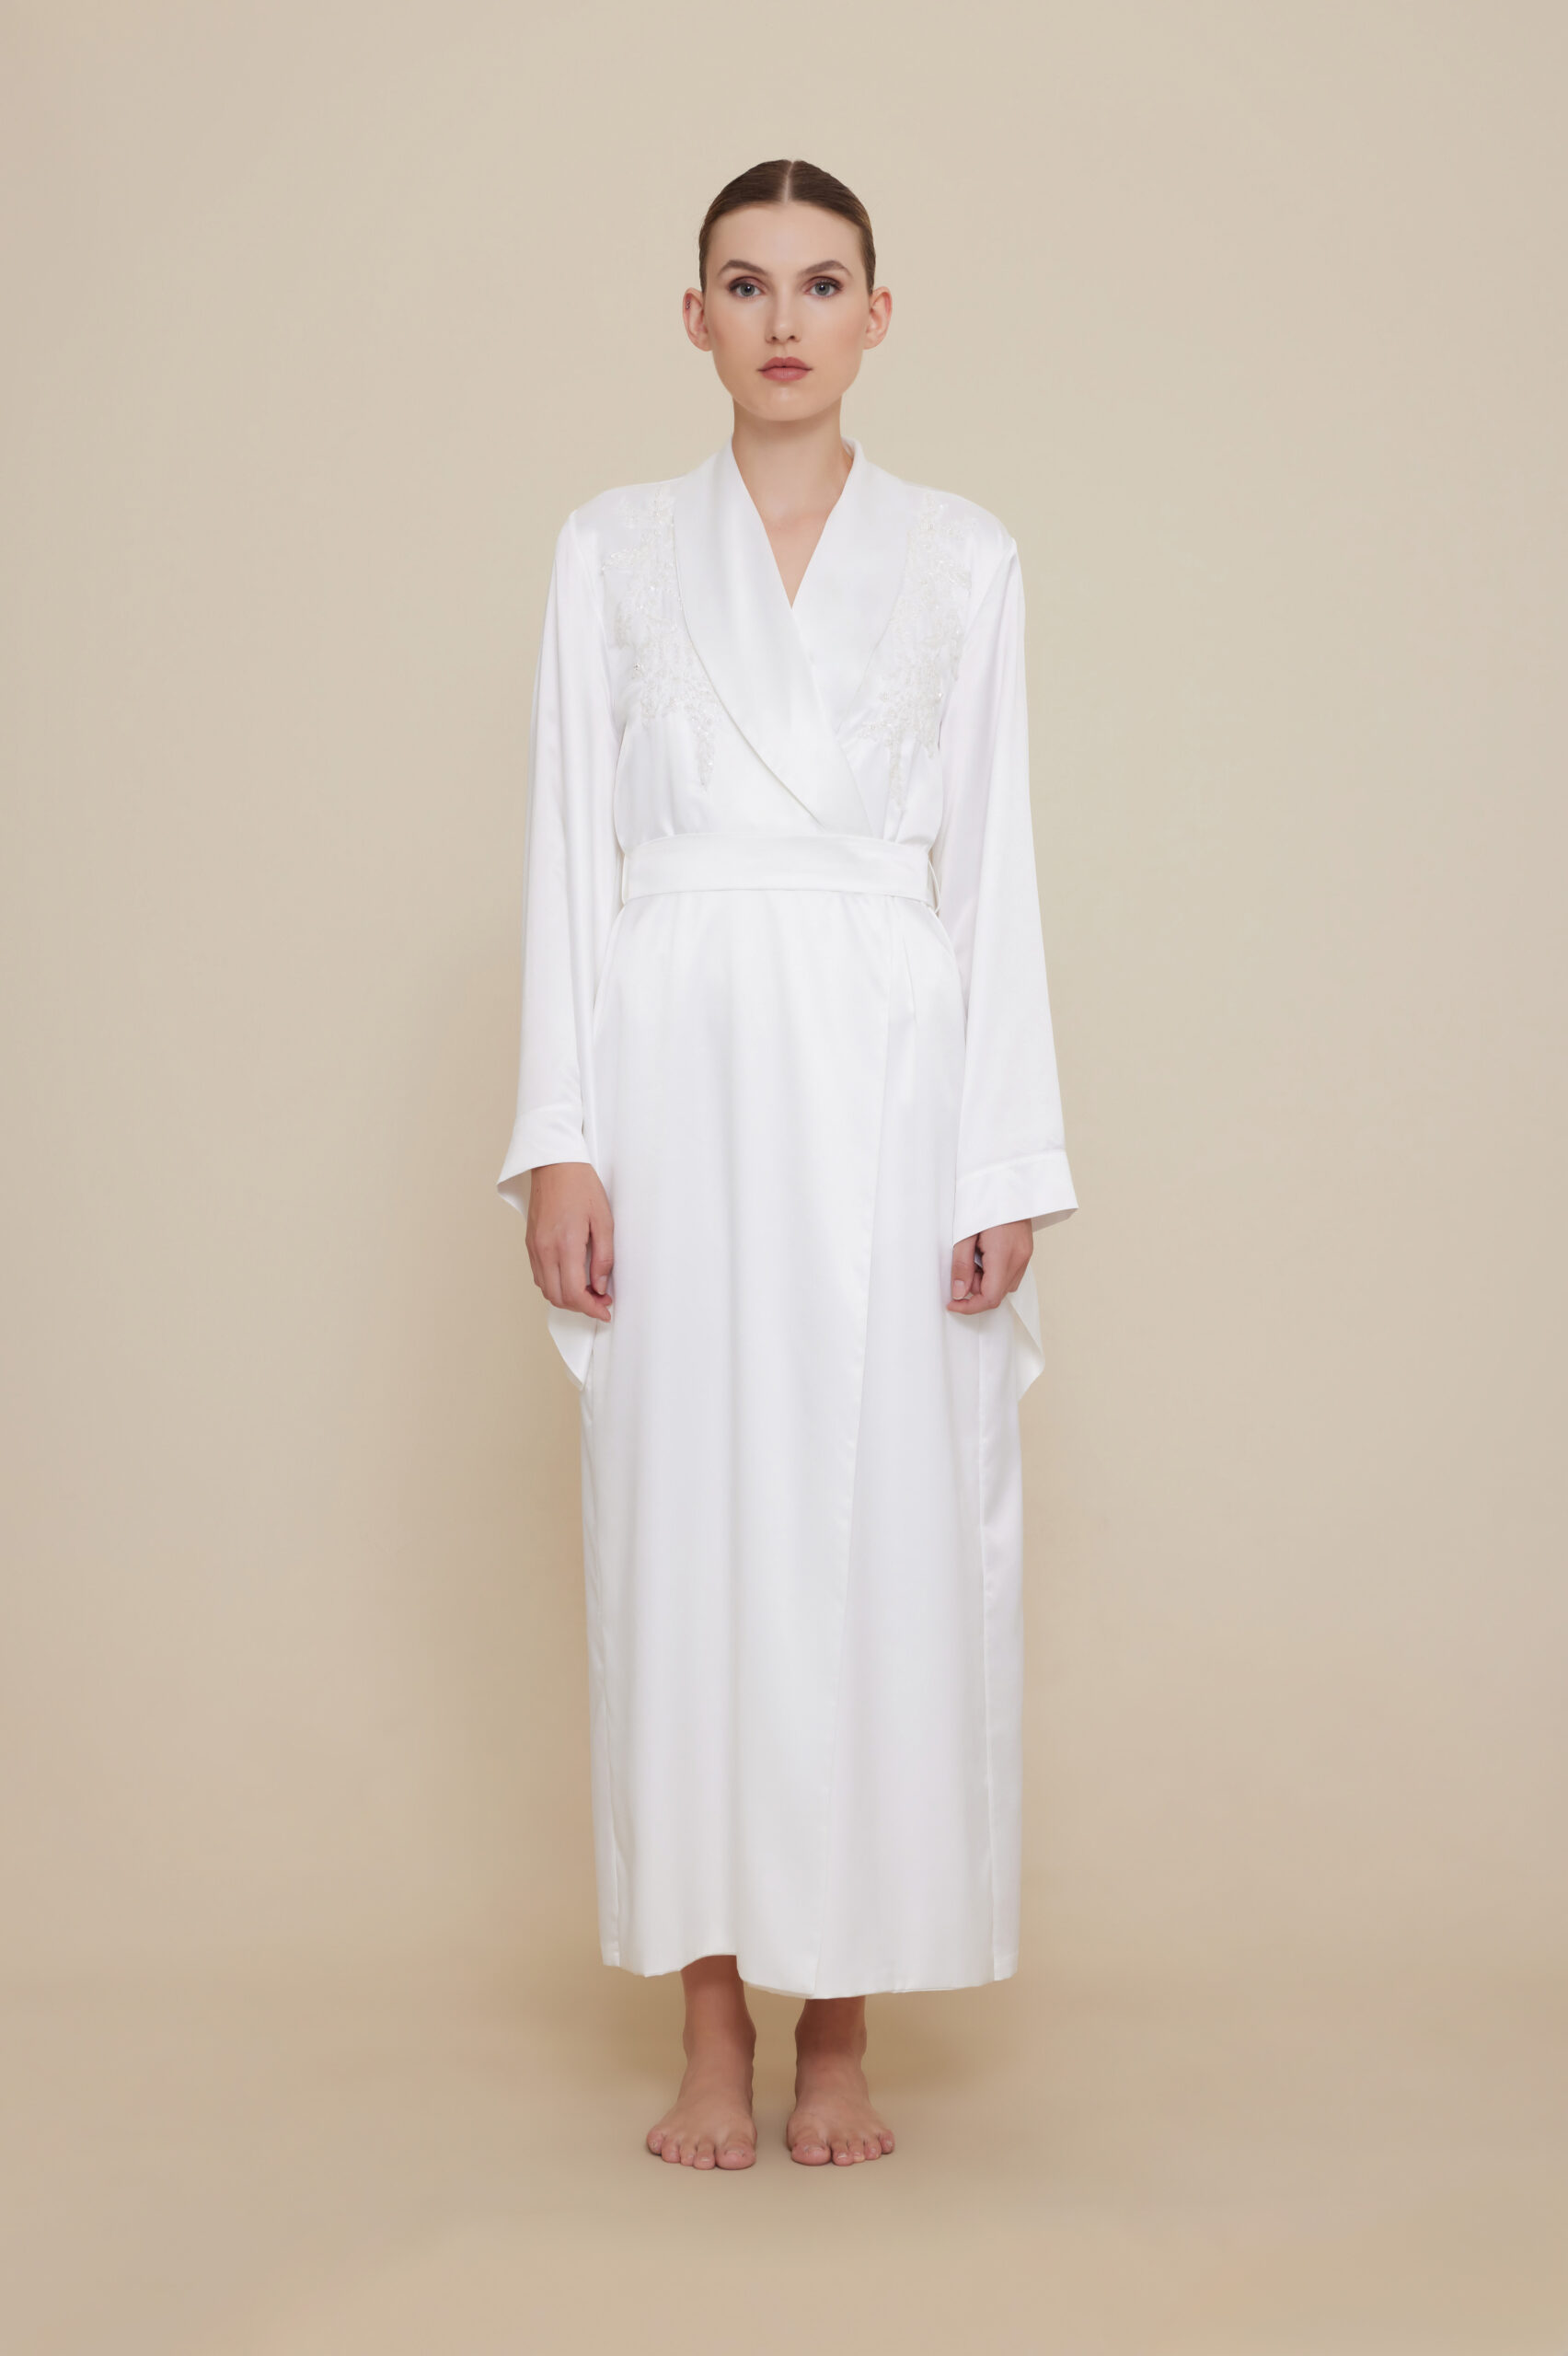 sheer-lingerie-white-lace-bridal-lingerie-dressing-gown -kimono-see-through-lounge-wear-699978_2048x2048.jpg?v=1699330606